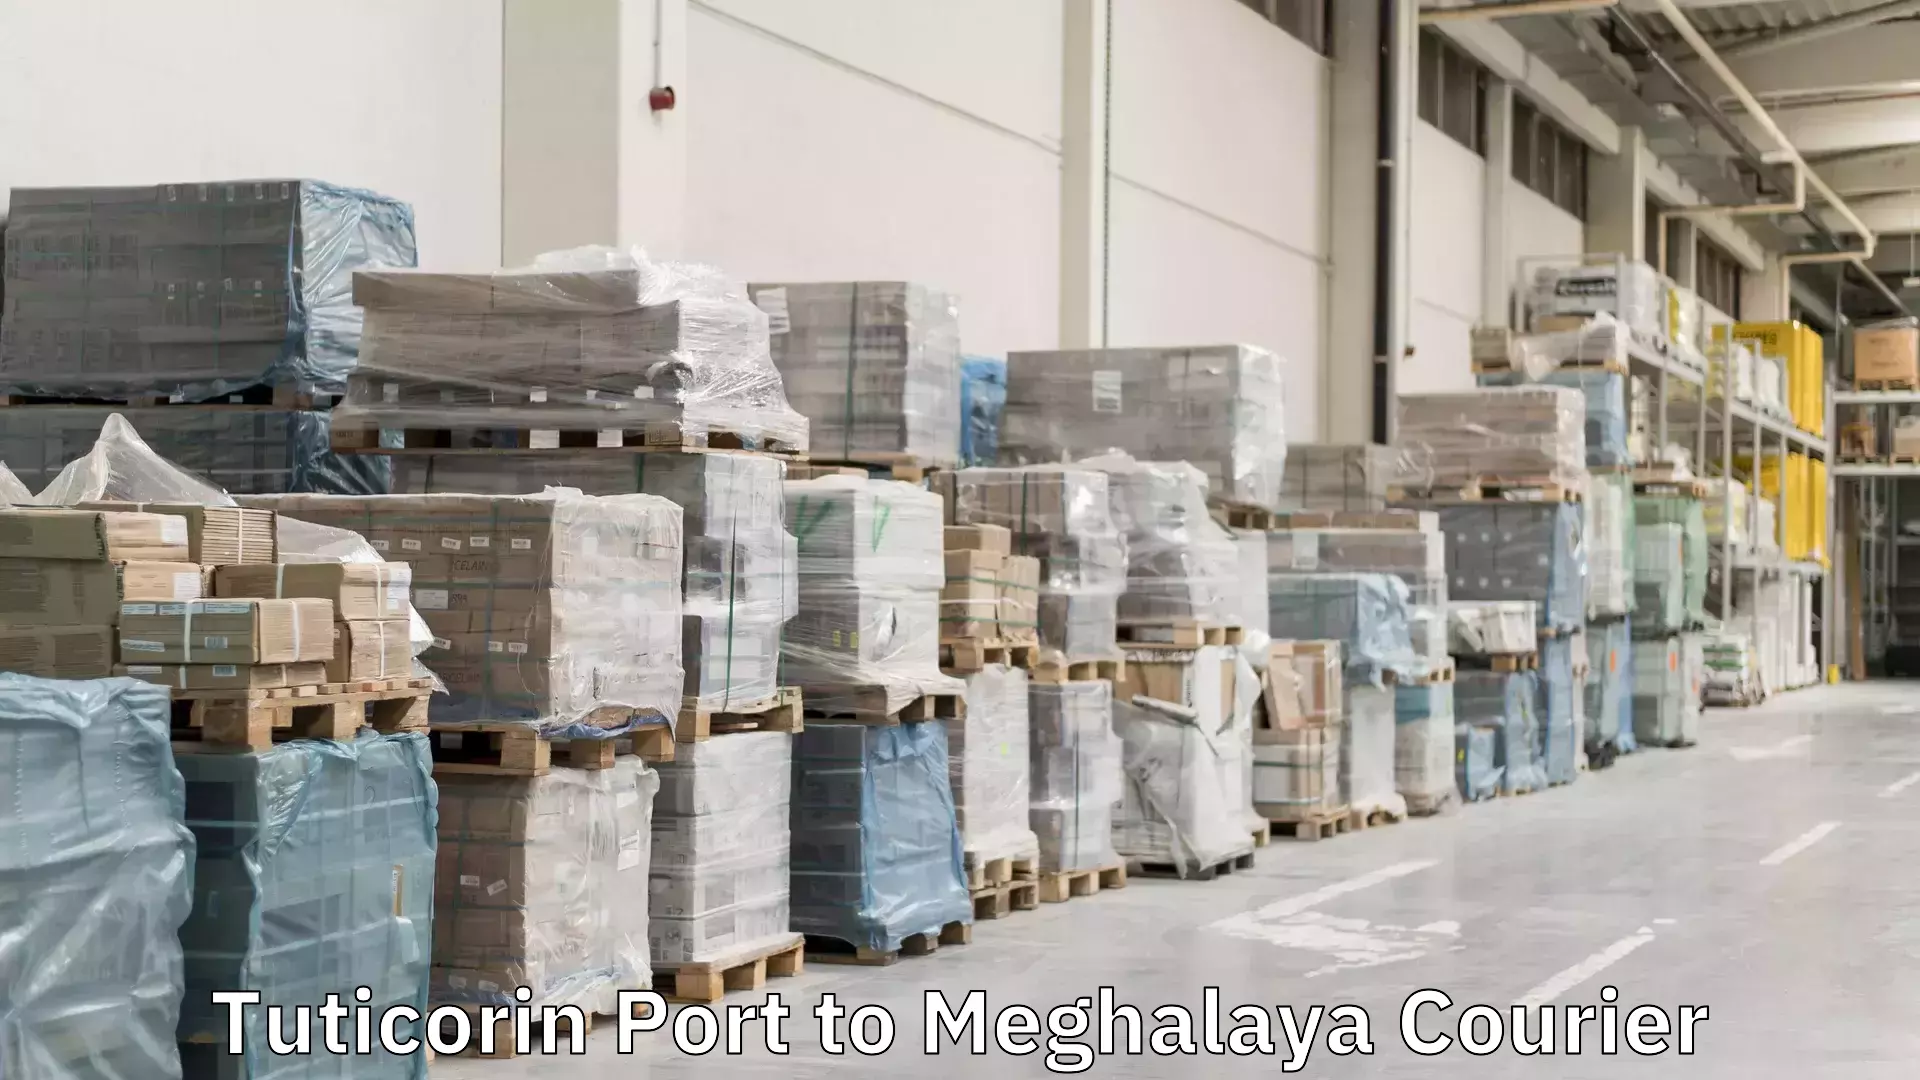 Cash on delivery service Tuticorin Port to Meghalaya